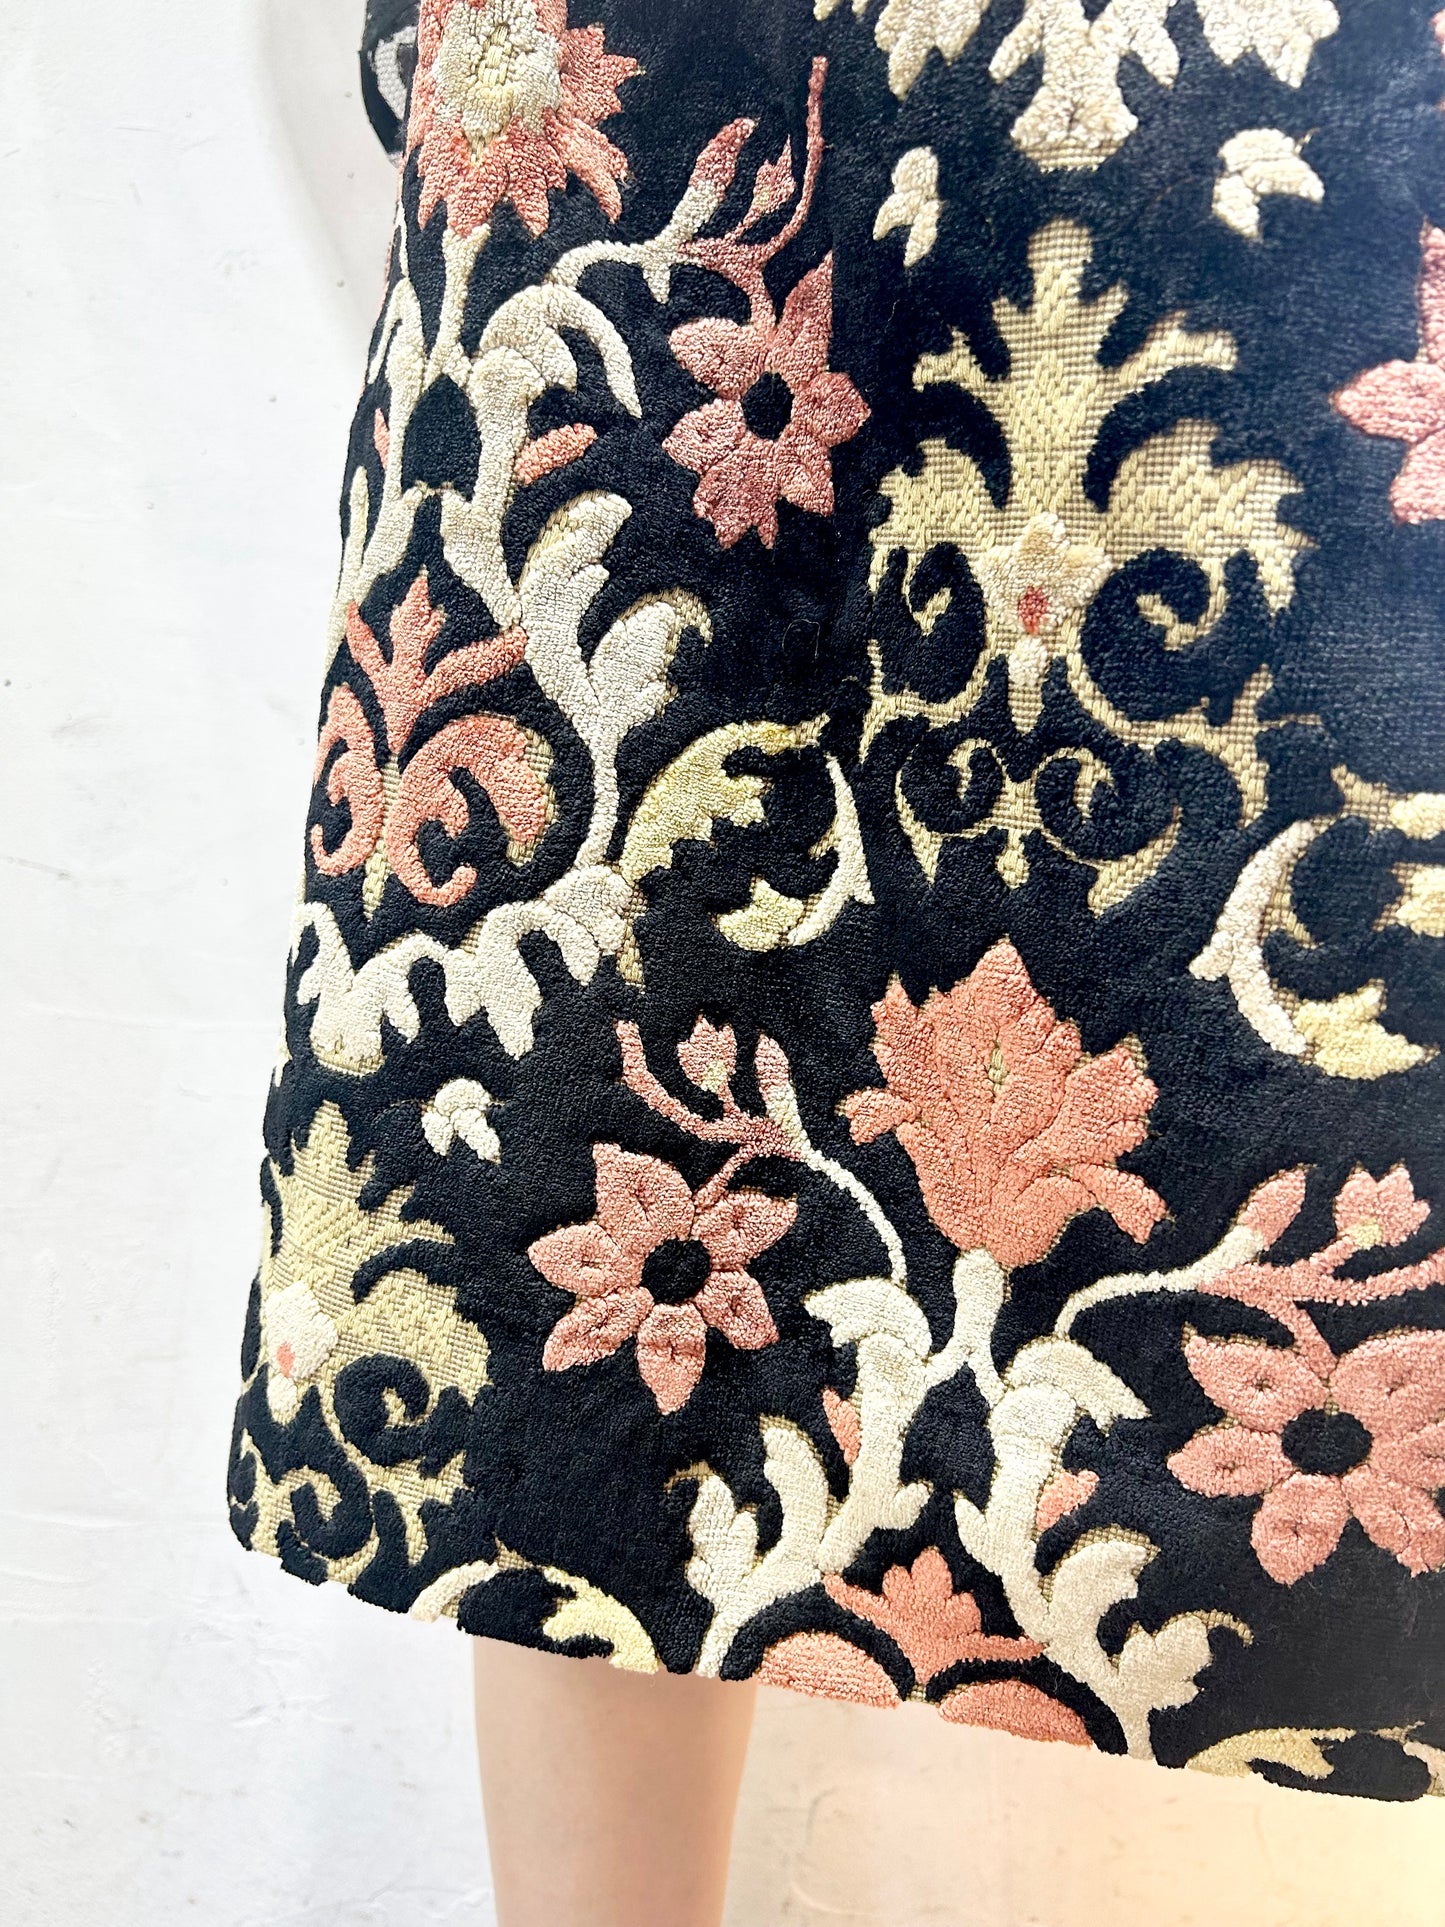 ’50-’60s Vintage Carpet Skirt [H24865]